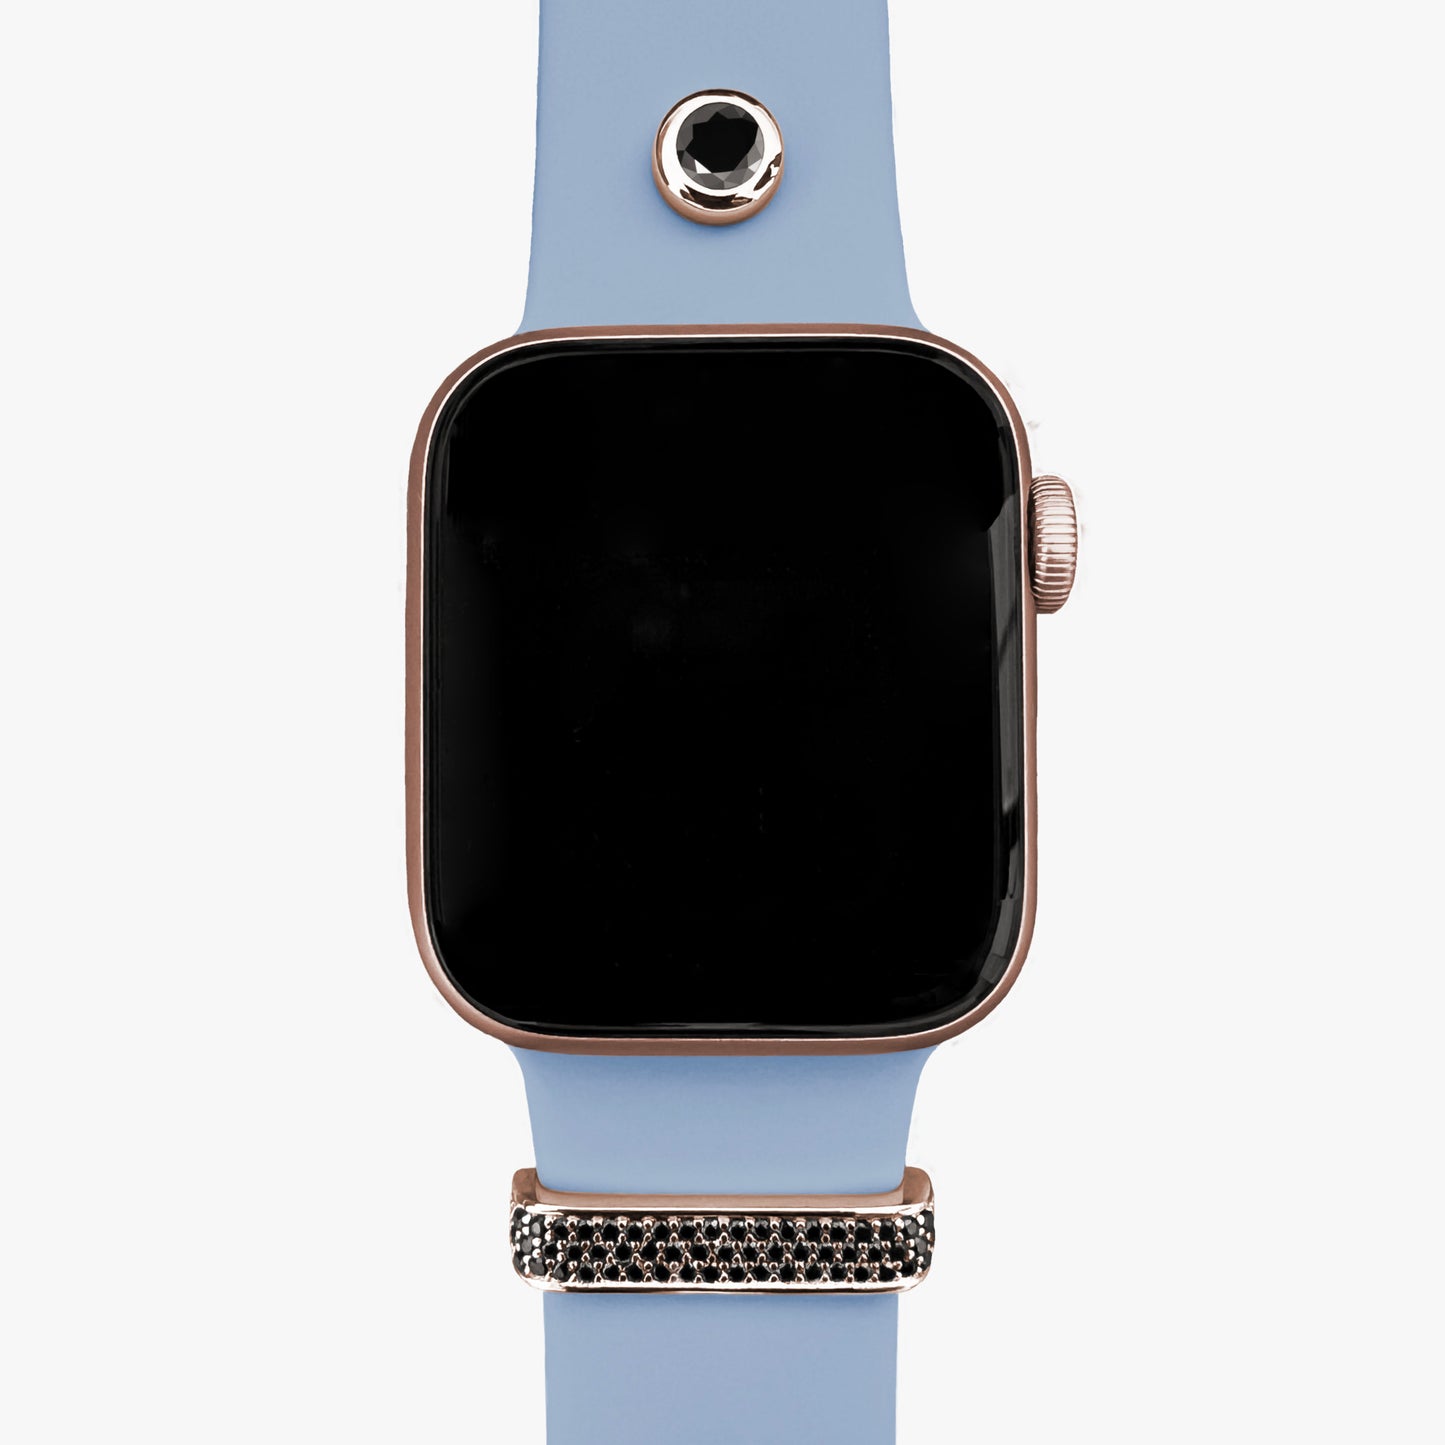 NEU! Set - Loop Stardust + Pin Moviestar & Armband für Apple Watch - 24k Roségold plattiert - hellblau